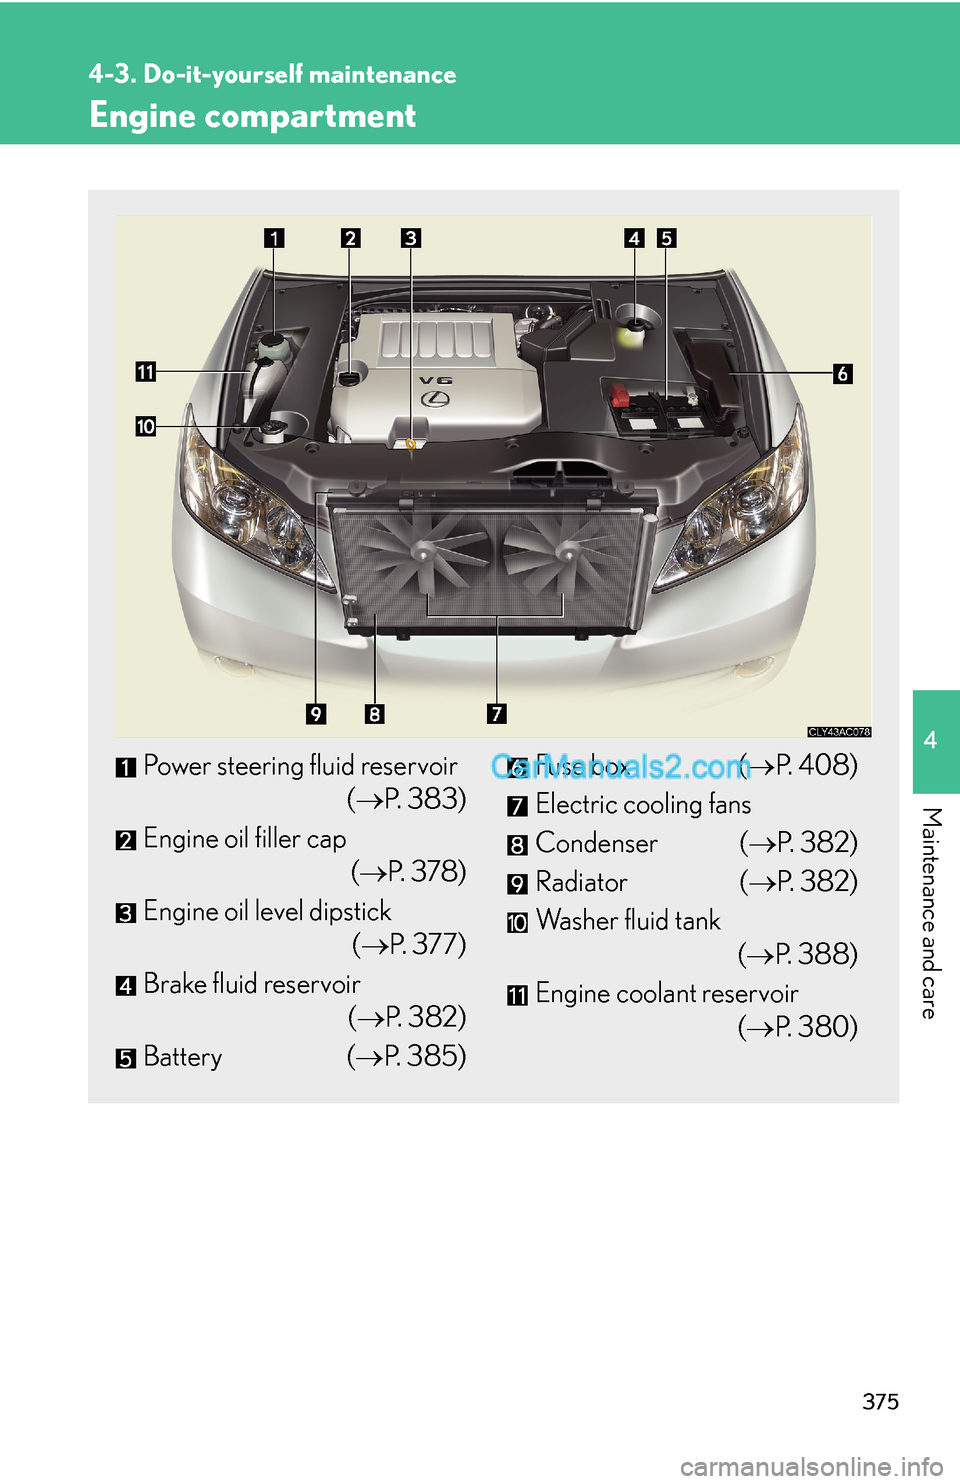 Lexus ES350 2010  Do-It-Yourself Maintenance 375
4-3. Do-it-yourself maintenance
4
Maintenance and care
Engine compartment
Power steering fluid reservoir 
(→P. 383)
Engine oil filler cap 
(→P.  3 7 8 )
Engine oil level dipstick 
(→P. 377)
